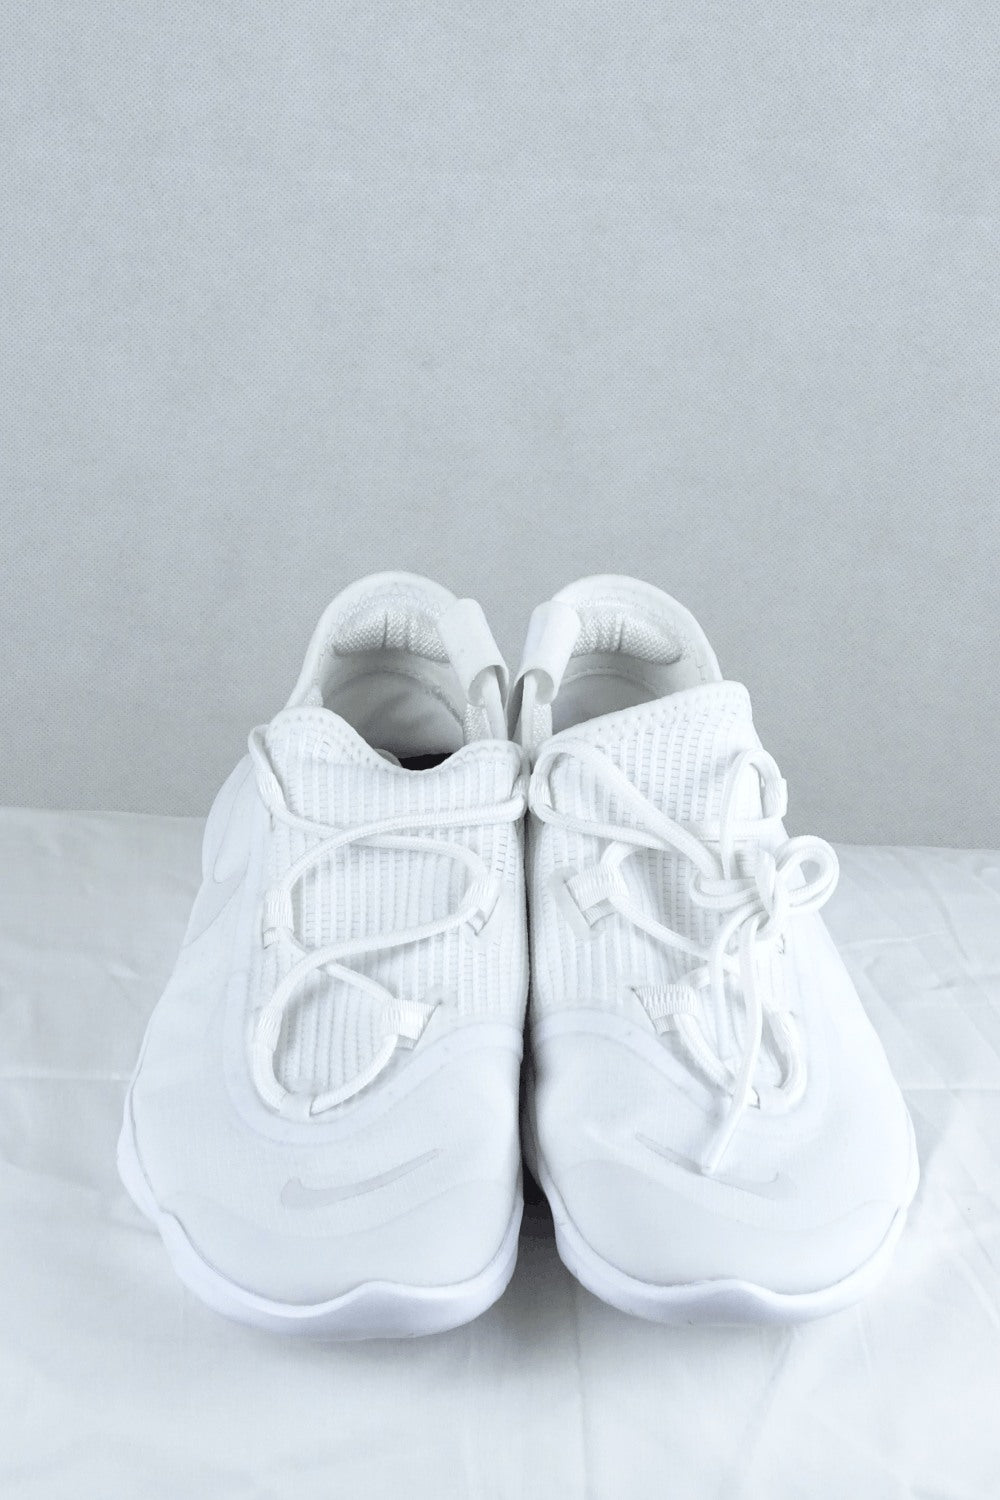 Nike F-r-e-e White Sneaker US9.5